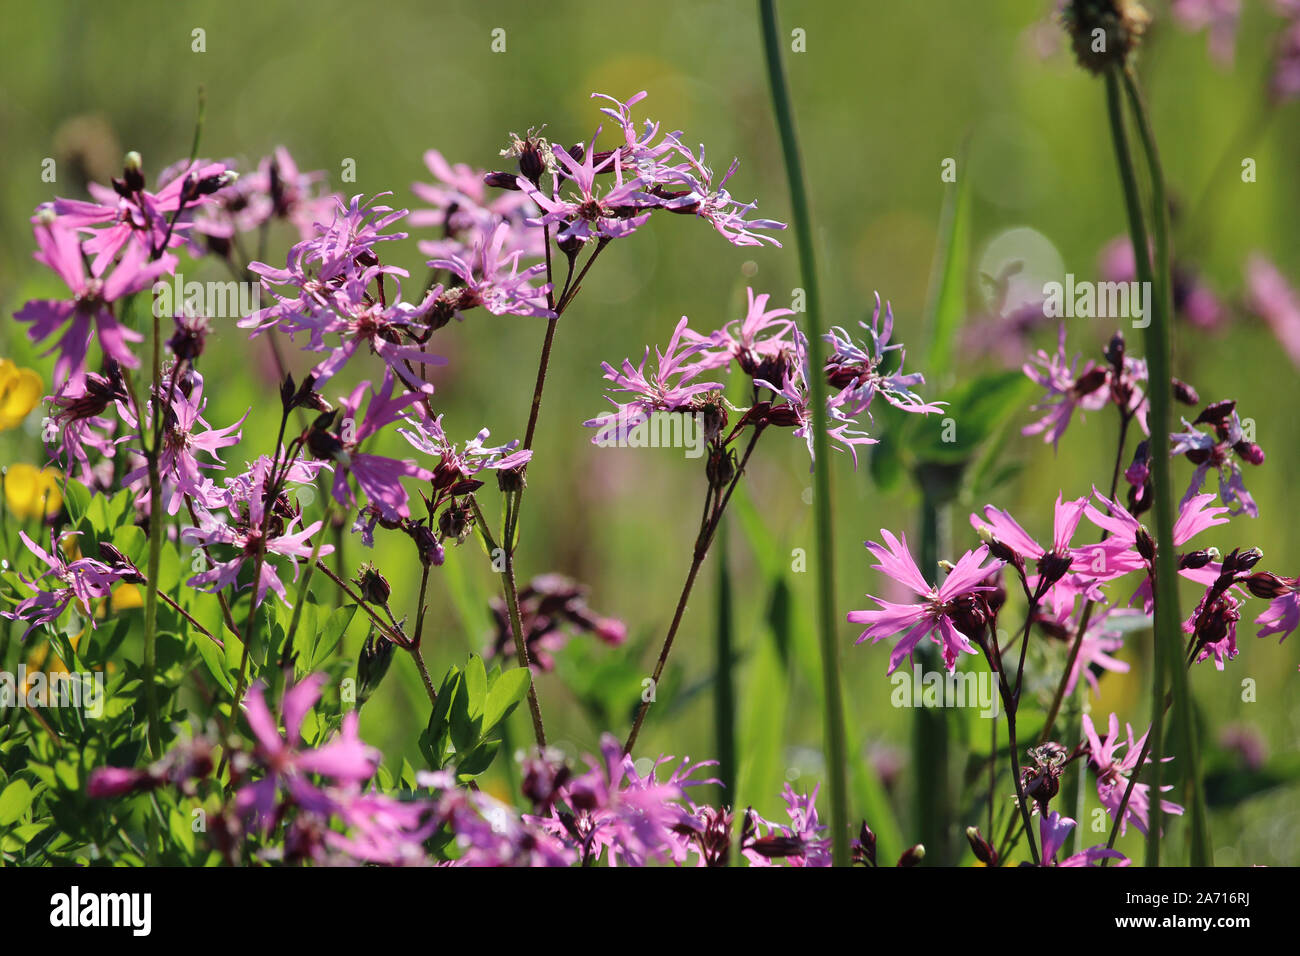 Bonitas flores silvestres fotografías e imágenes de alta resolución - Alamy